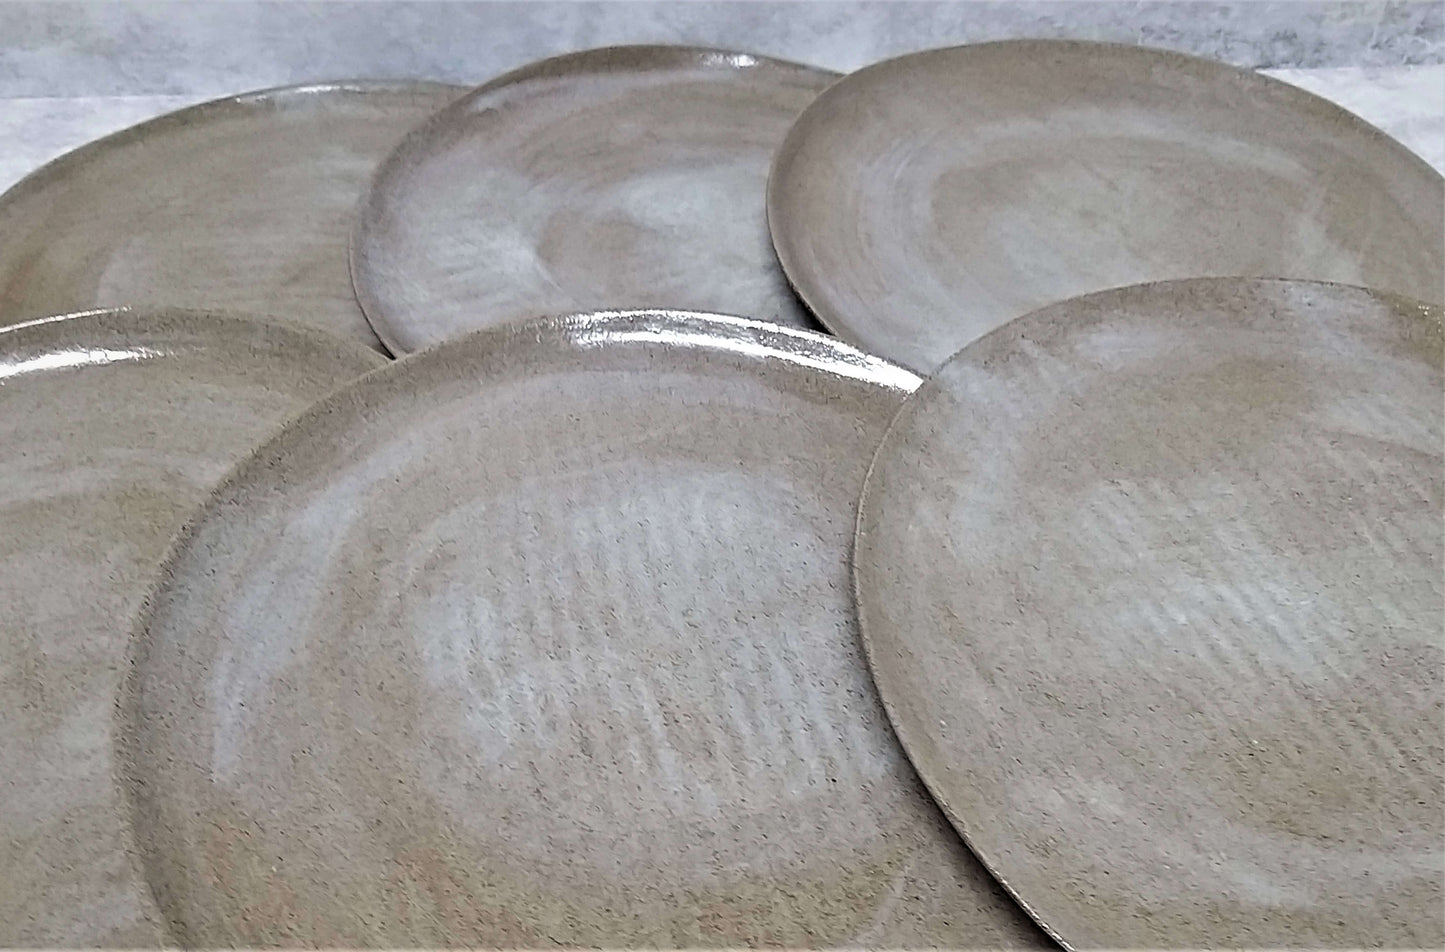 Gray and white ceramic plates